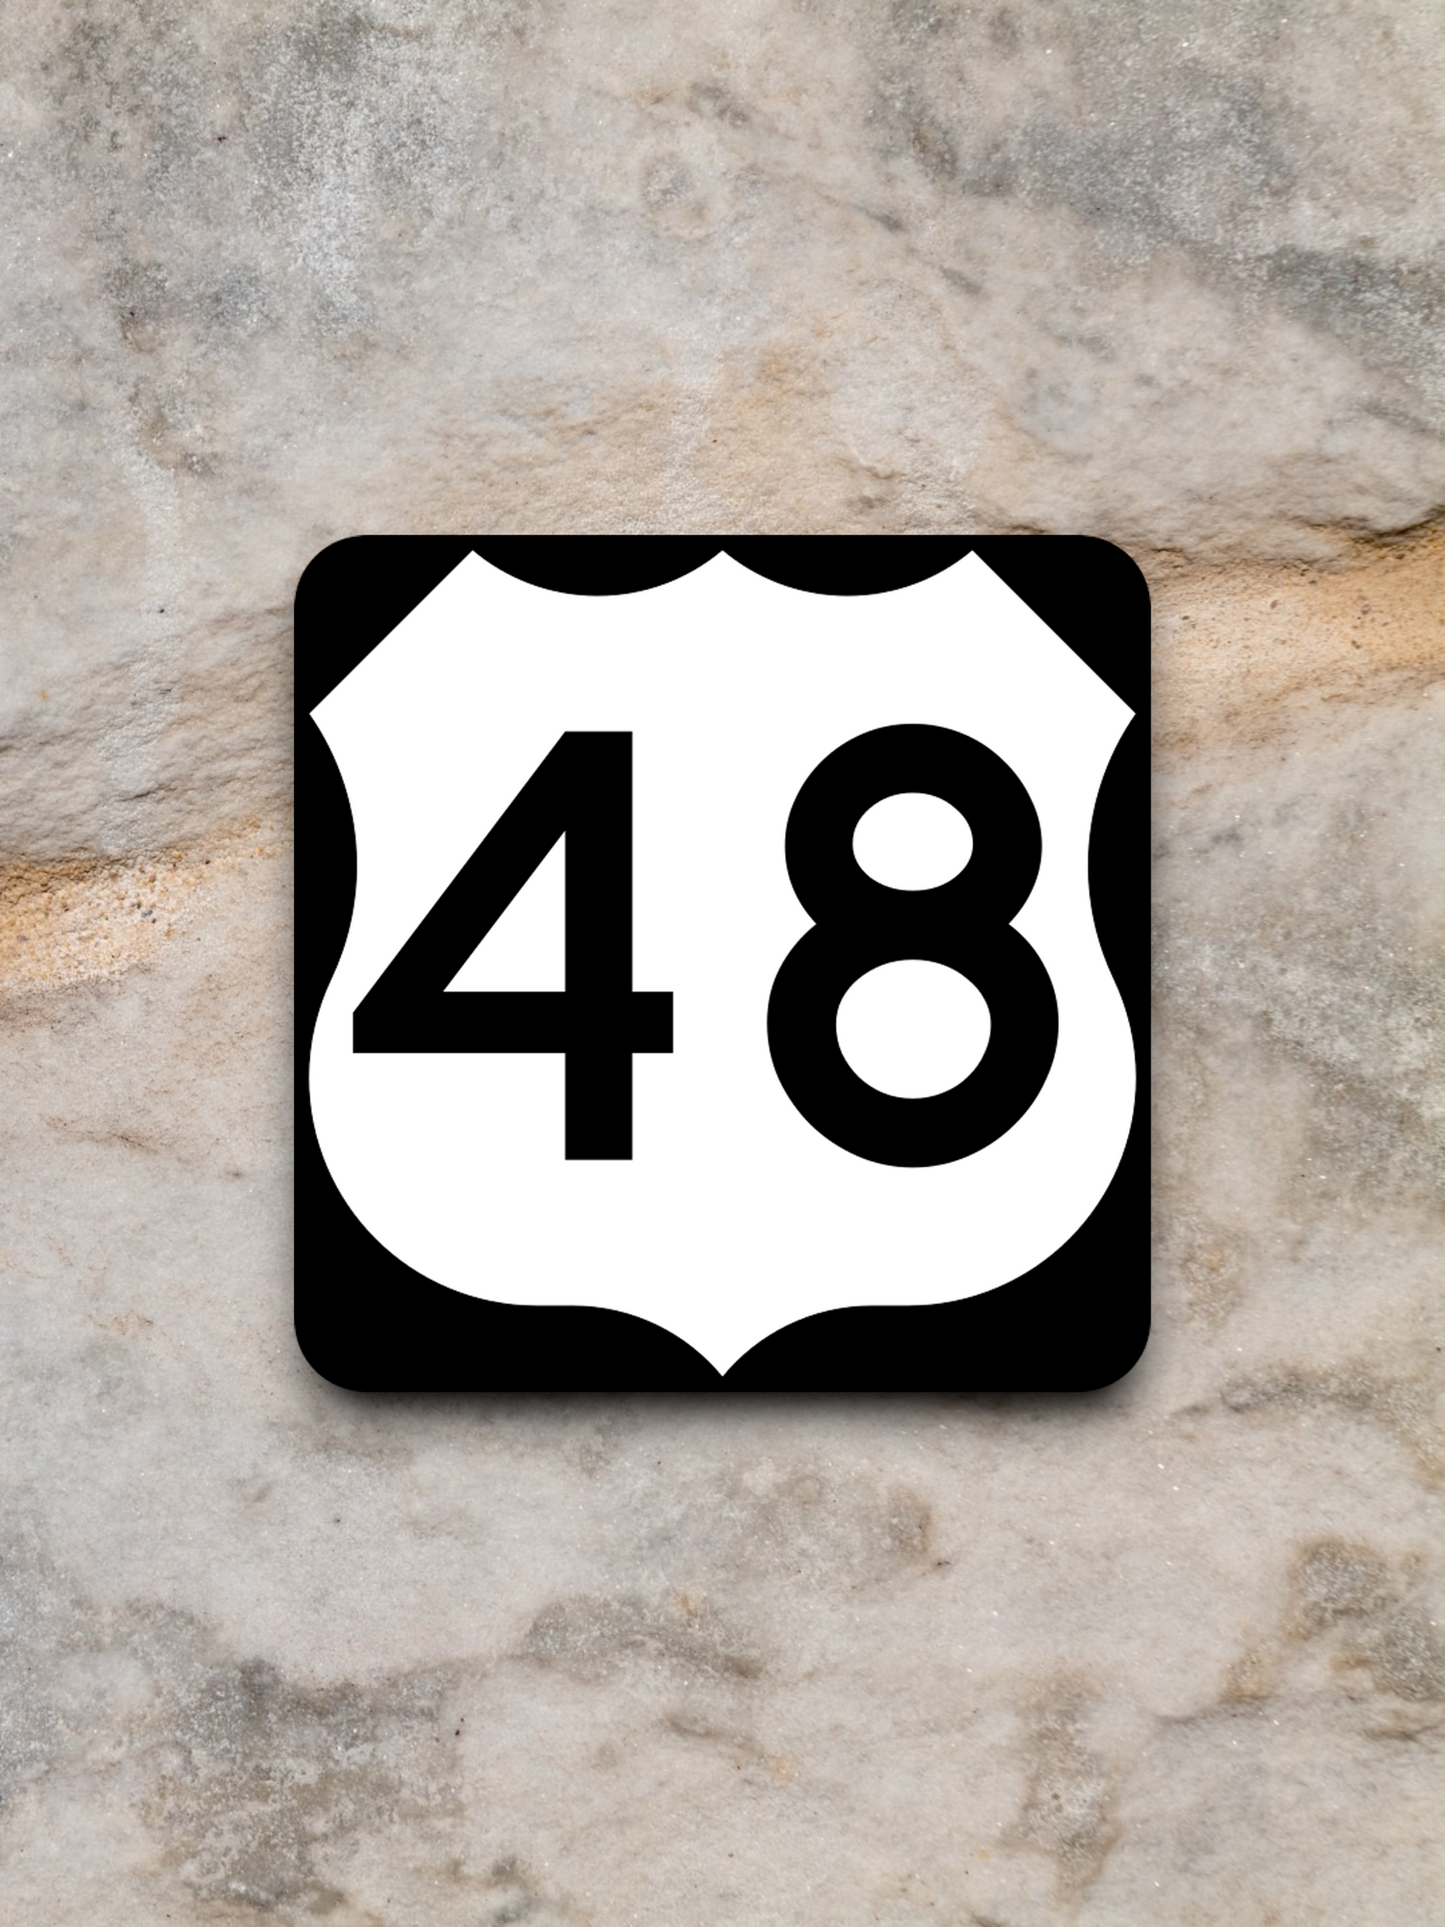 U.S. Route 48 Road Sign Sticker